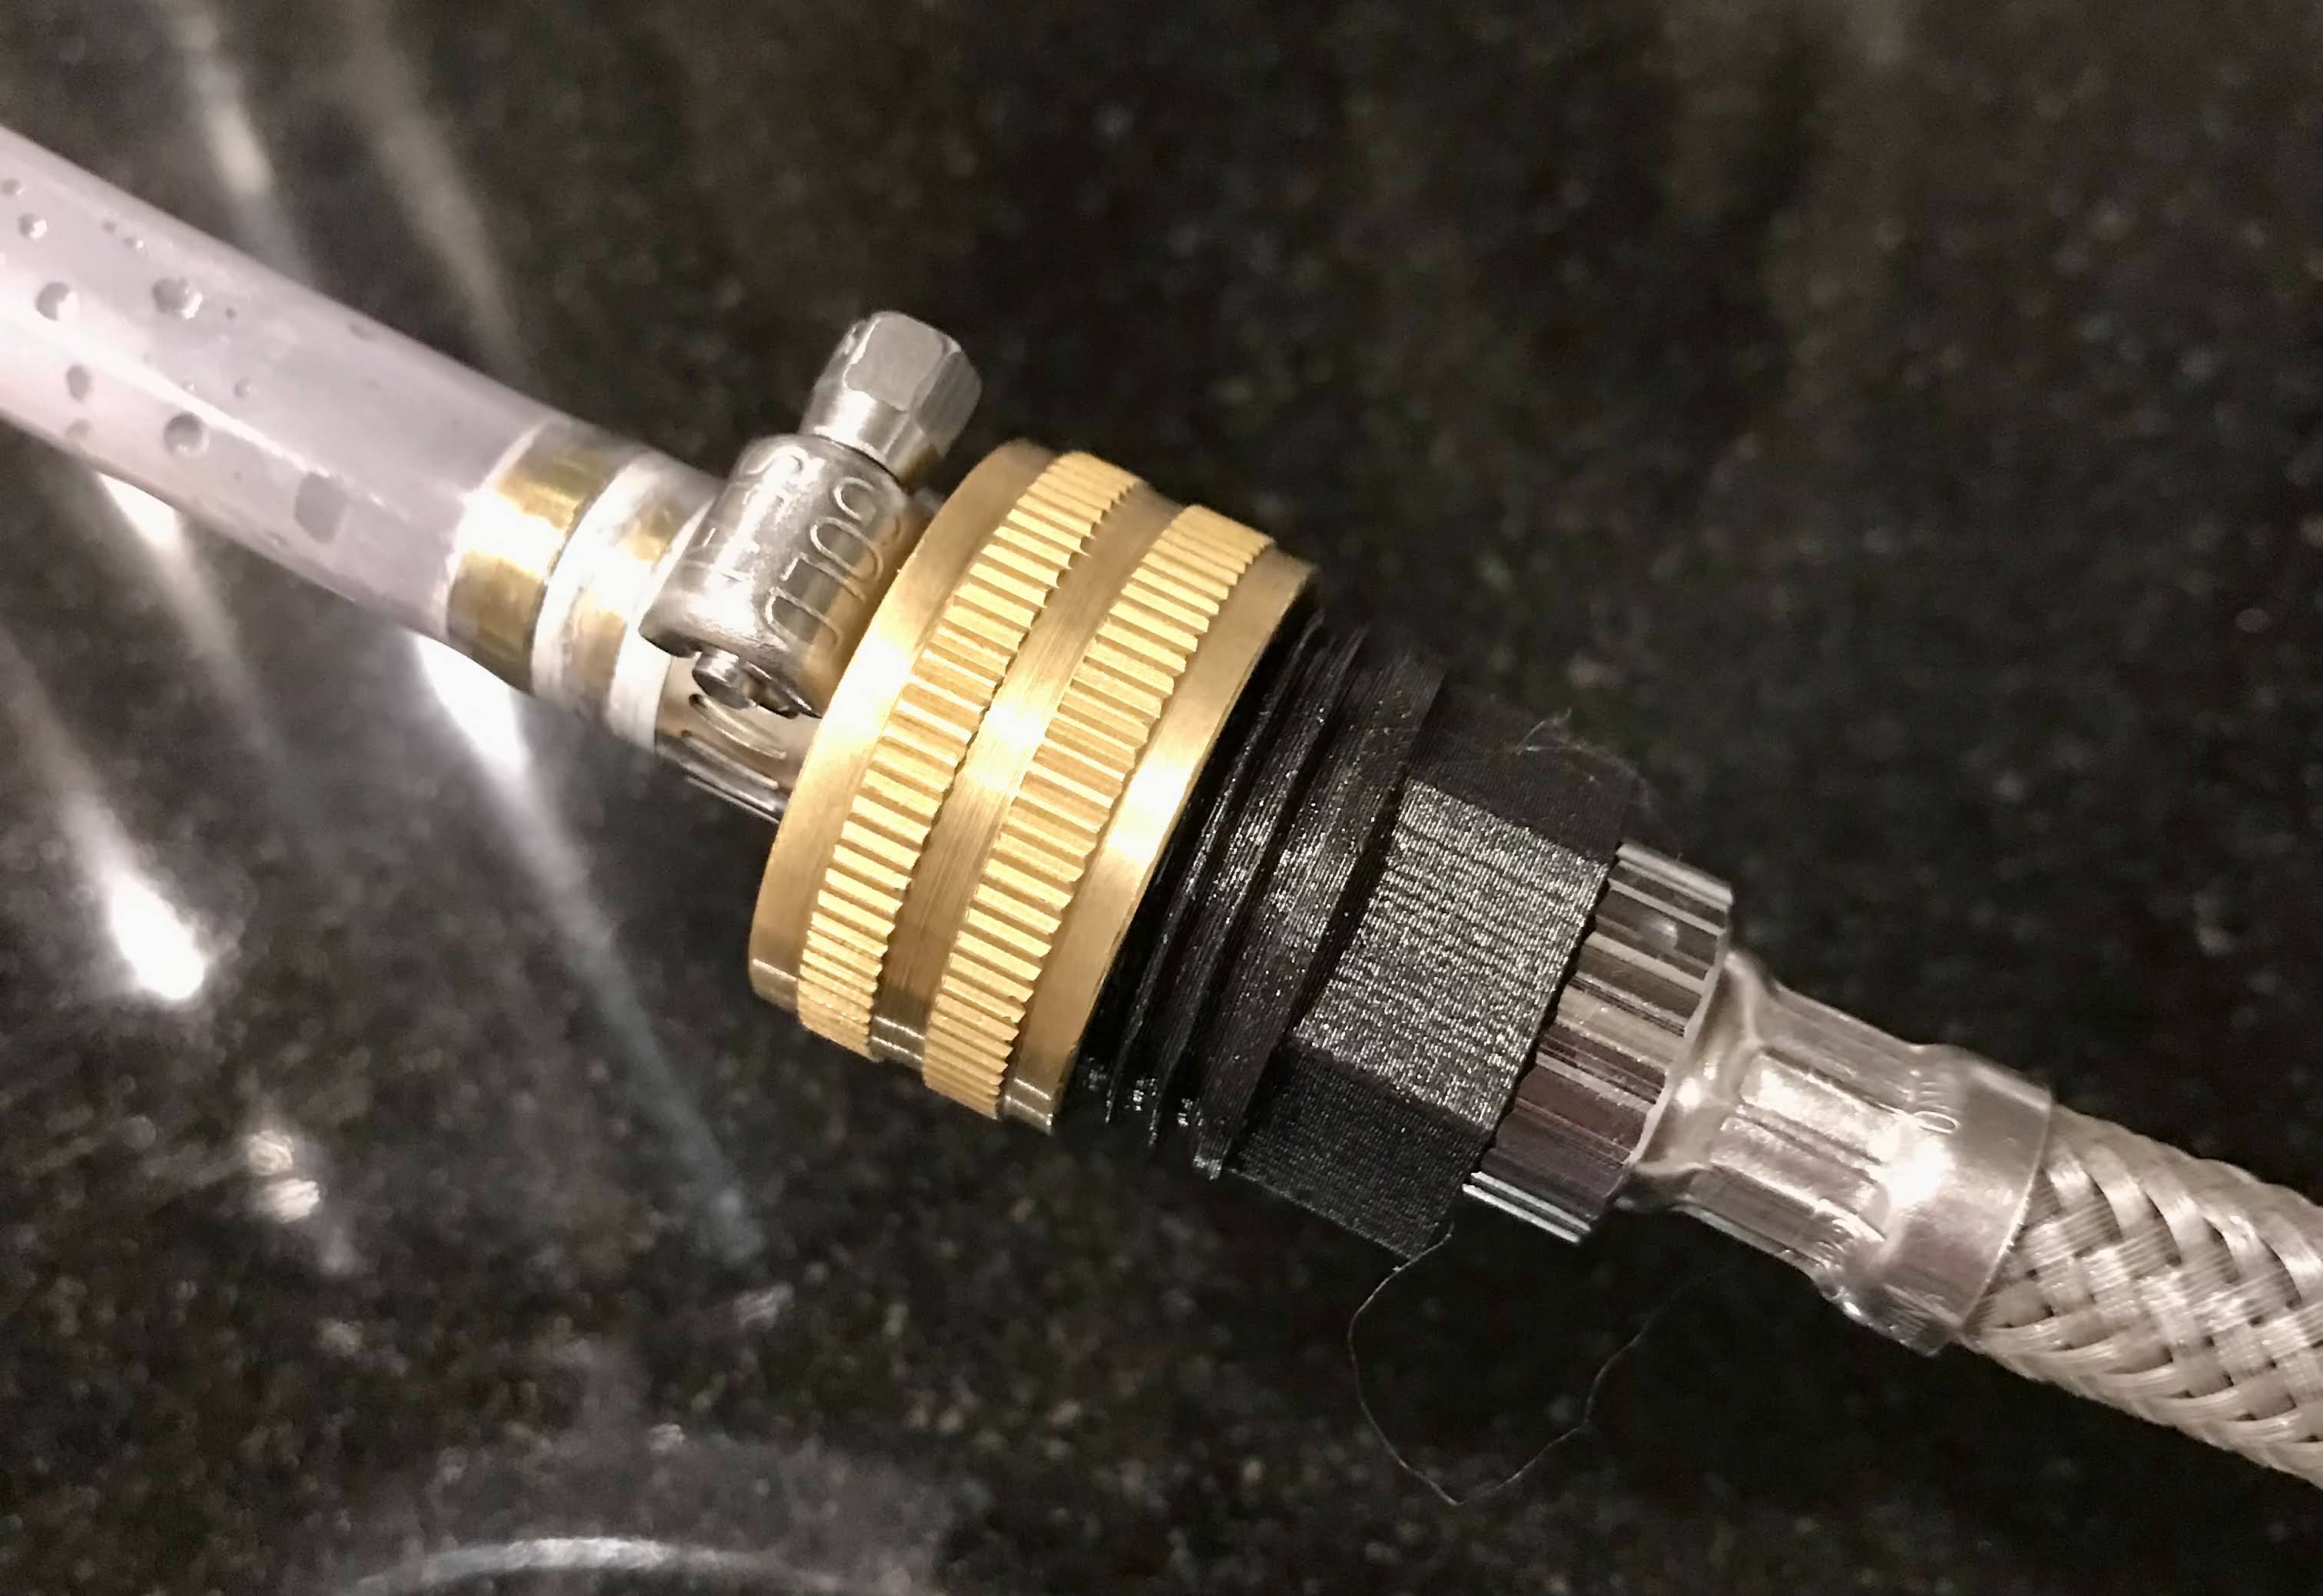 Delta faucet sprayer hose to garden hose thread adapter